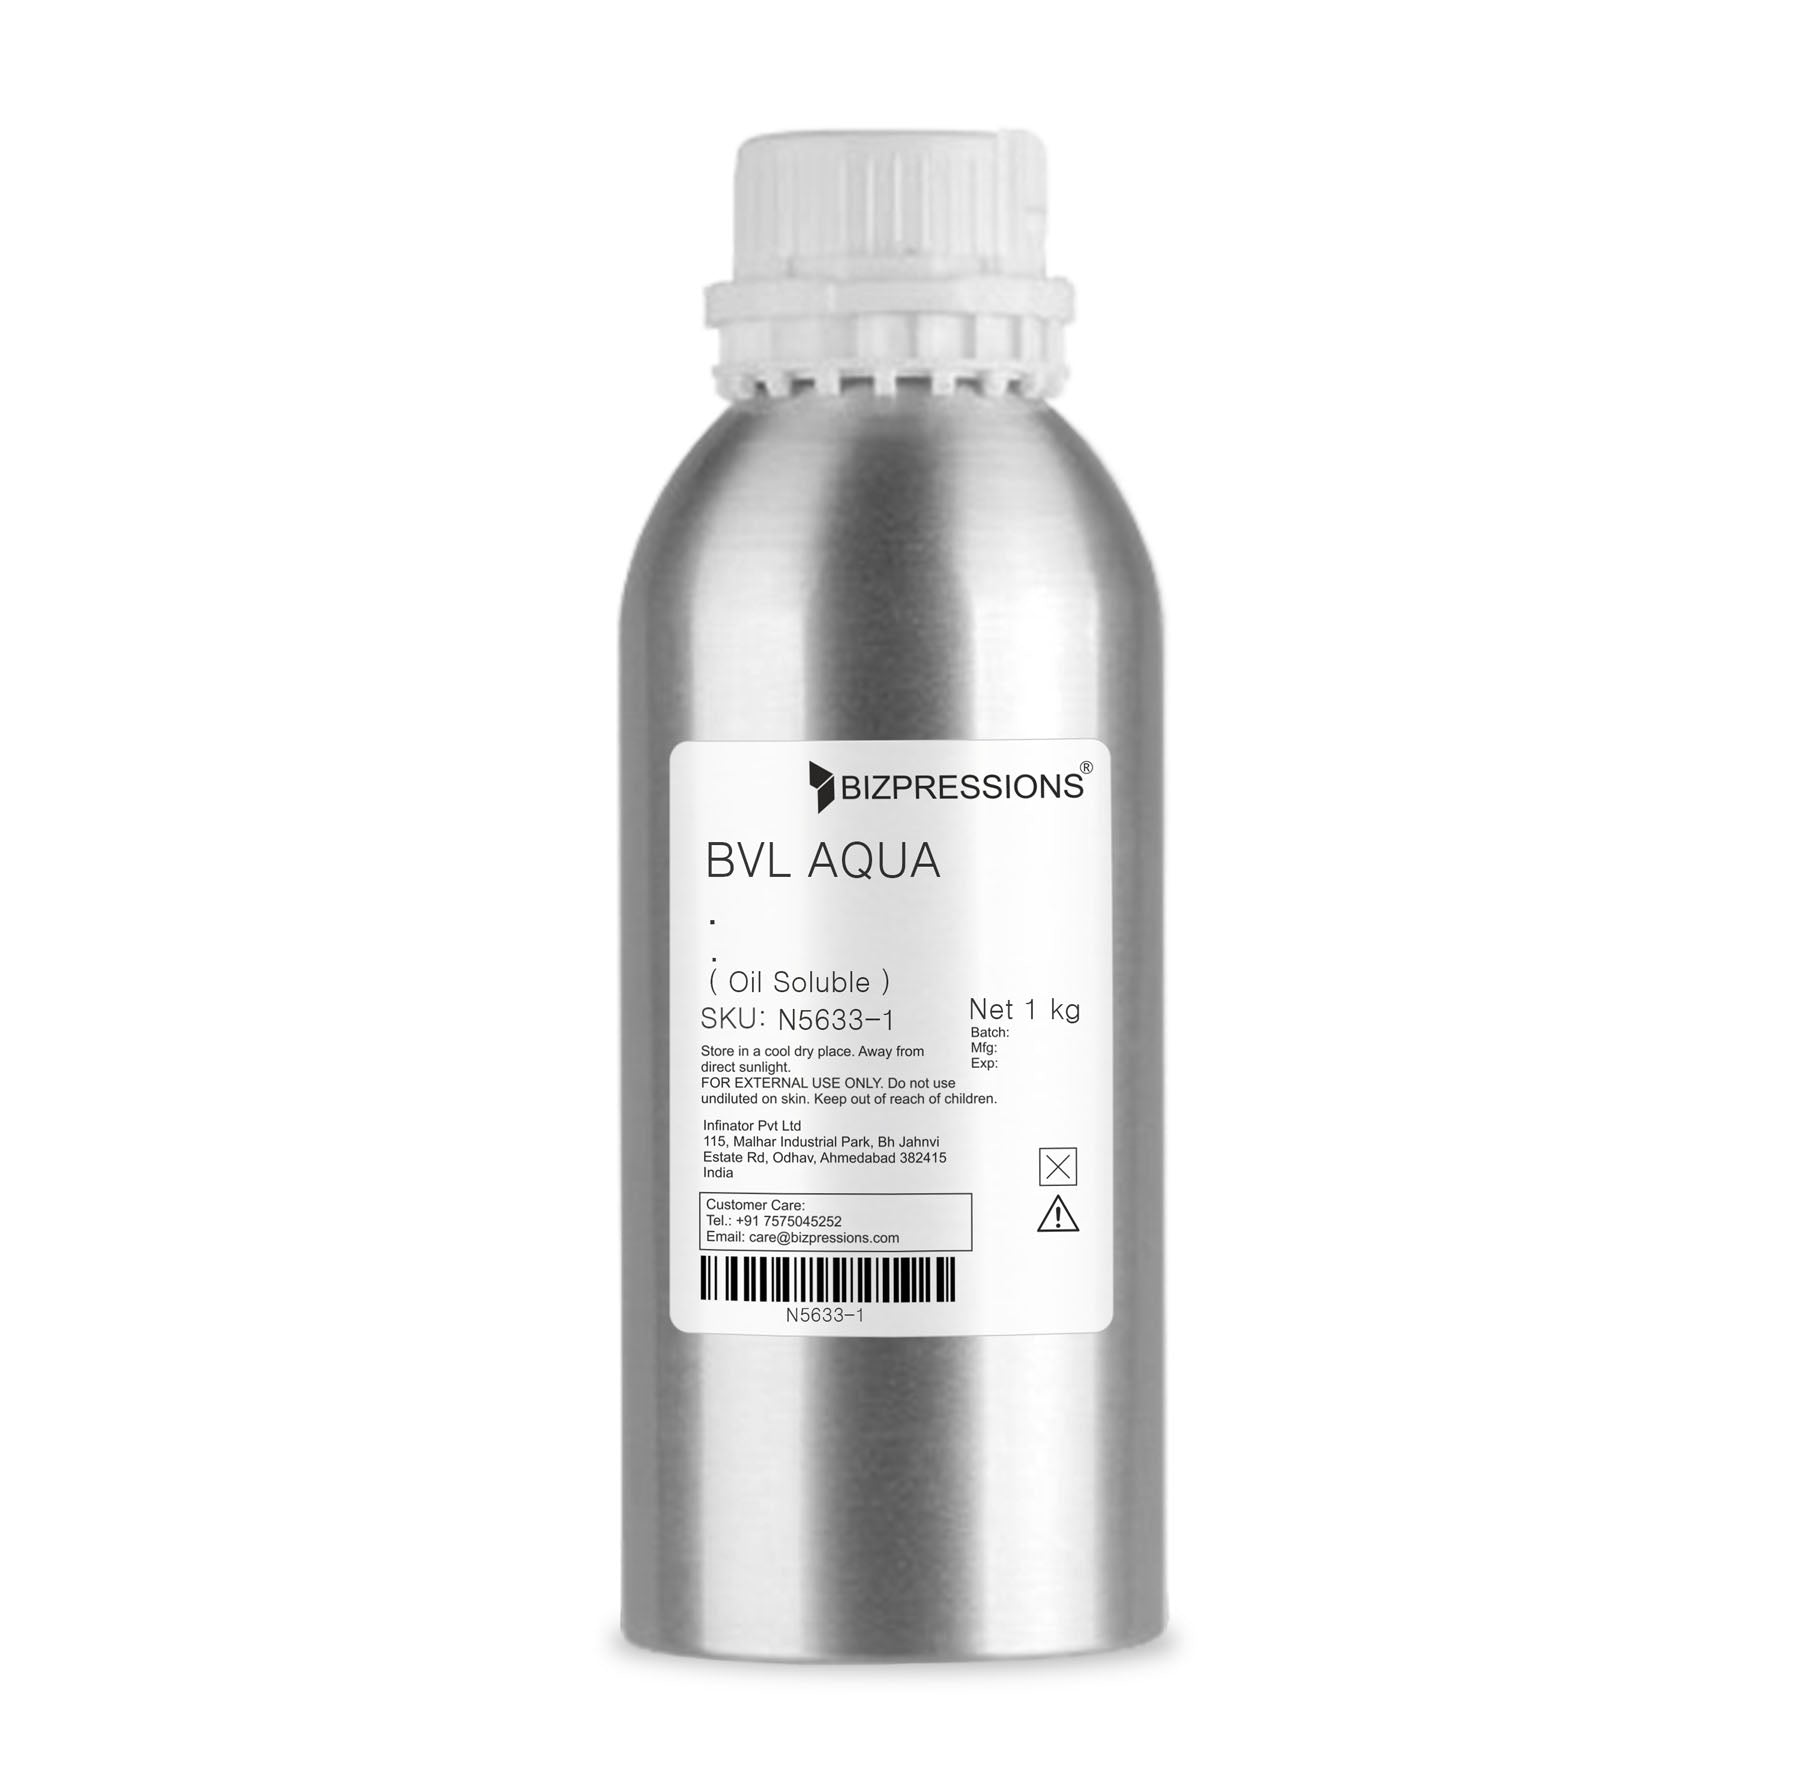 BVL AQUA - Fragrance ( Oil Soluble ) - 1 kg